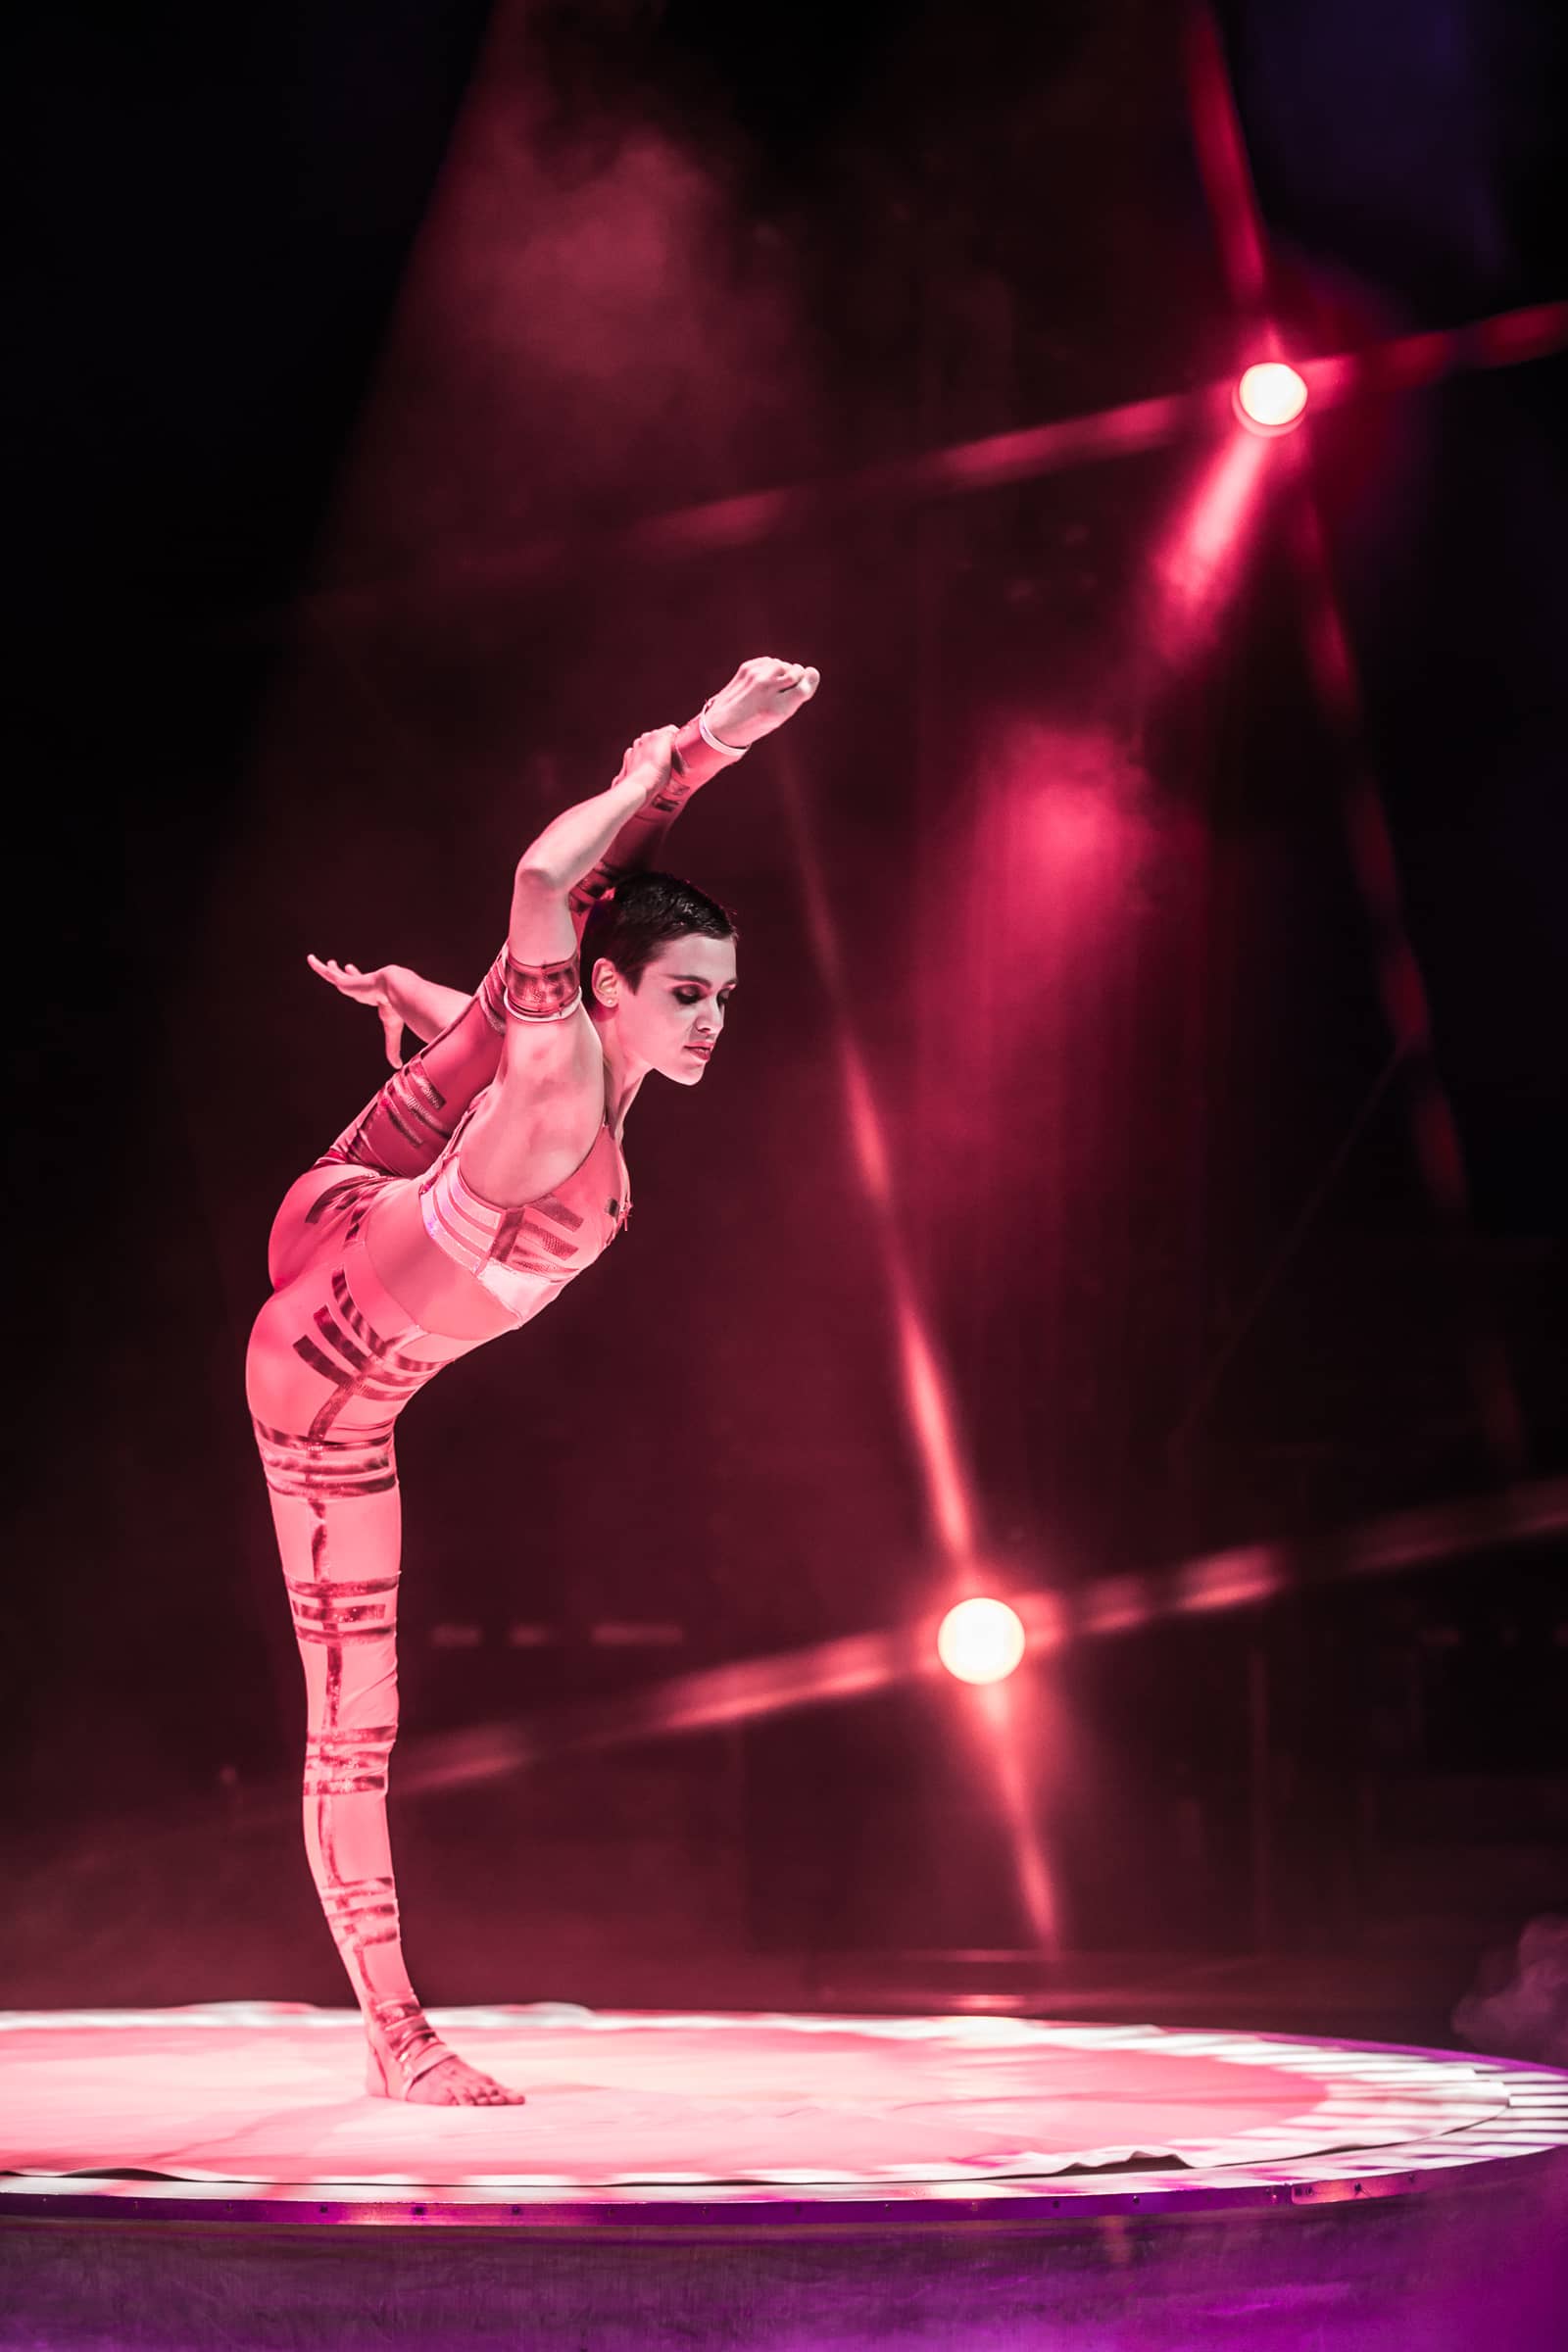 Nina Burri @ Circus KNIE, Fribourg, Suisse, 2013